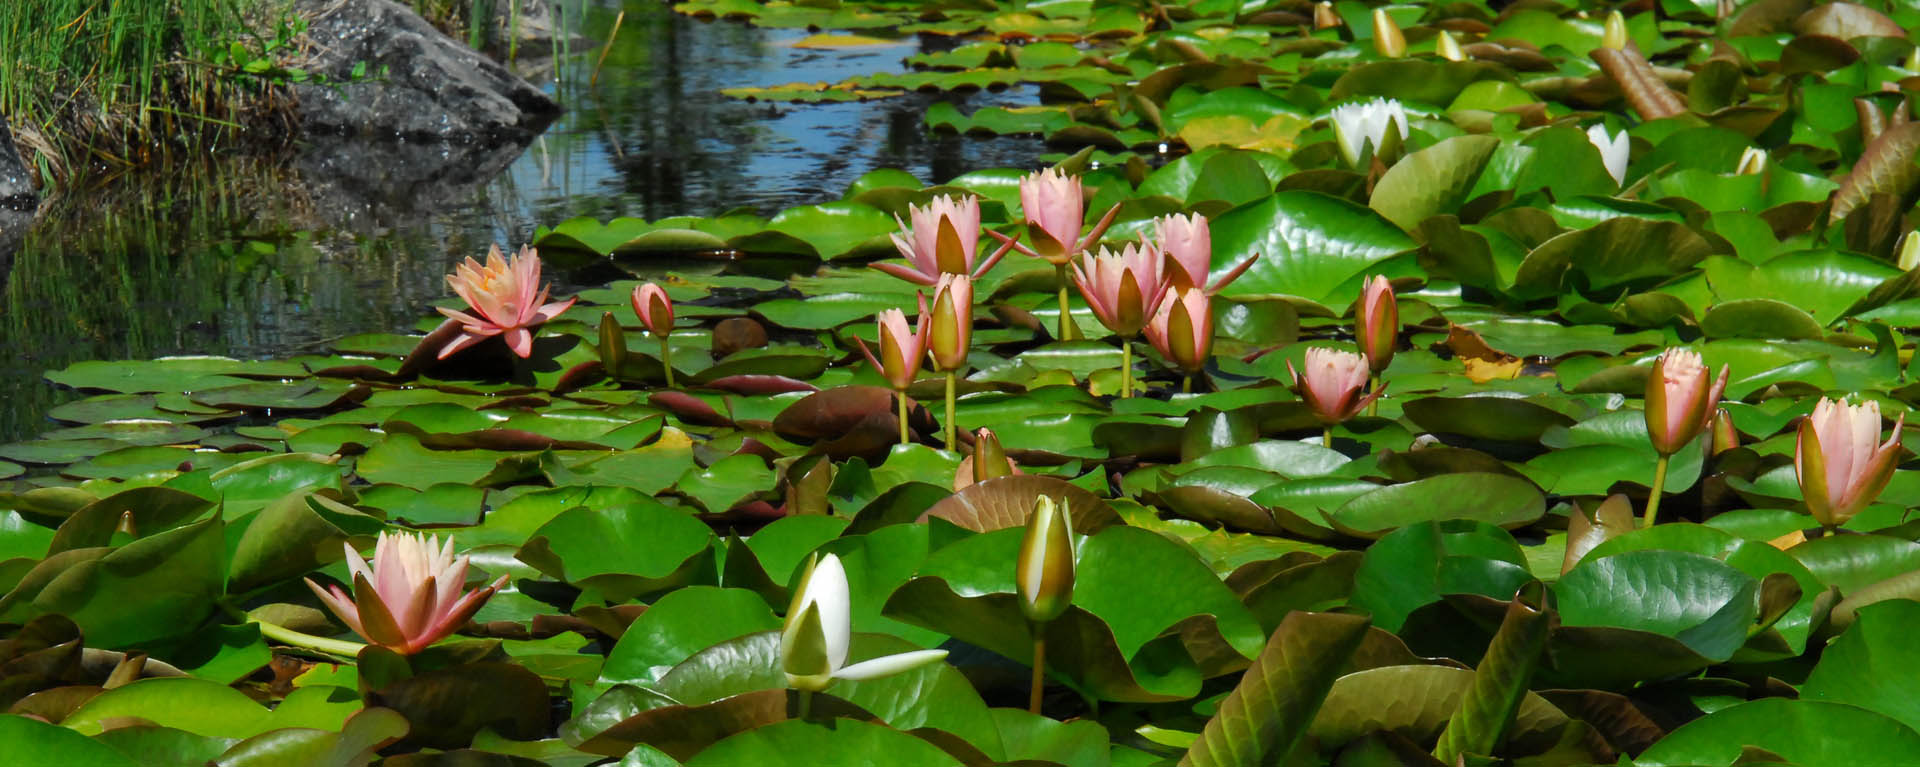 lotus plants floating on water